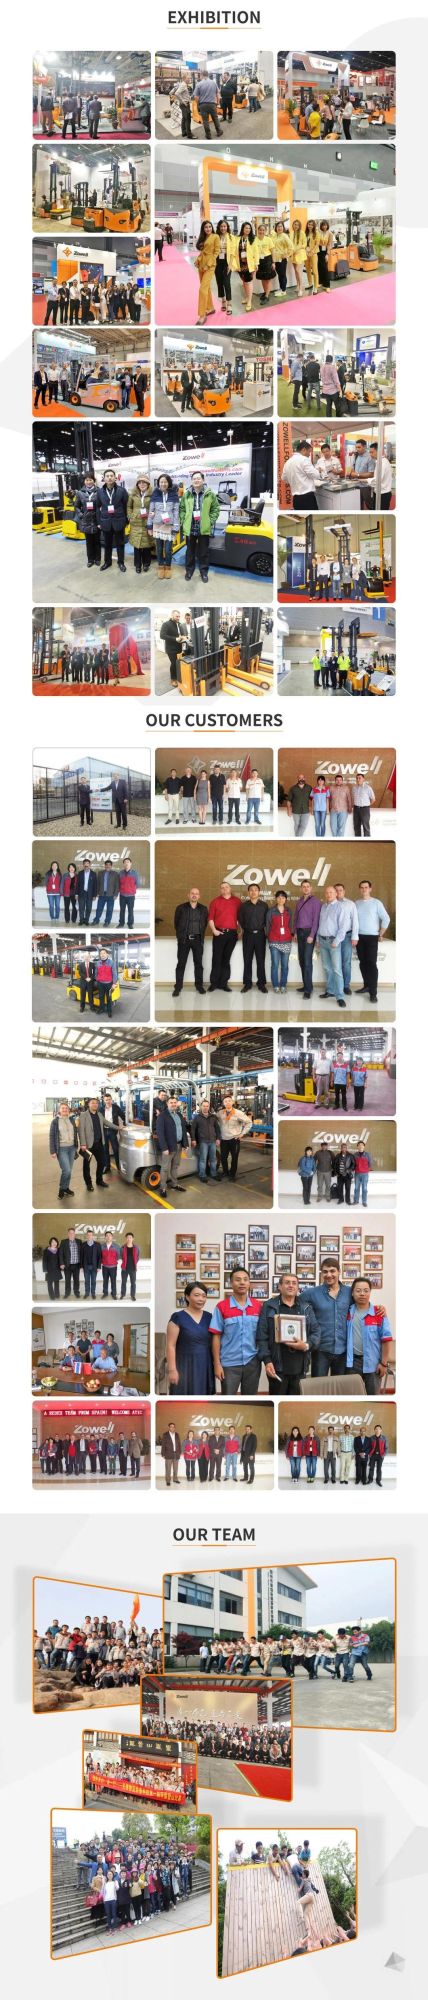 900mm 500mm Zowell Heli Forklift Truck Price 12t Pallet Jack